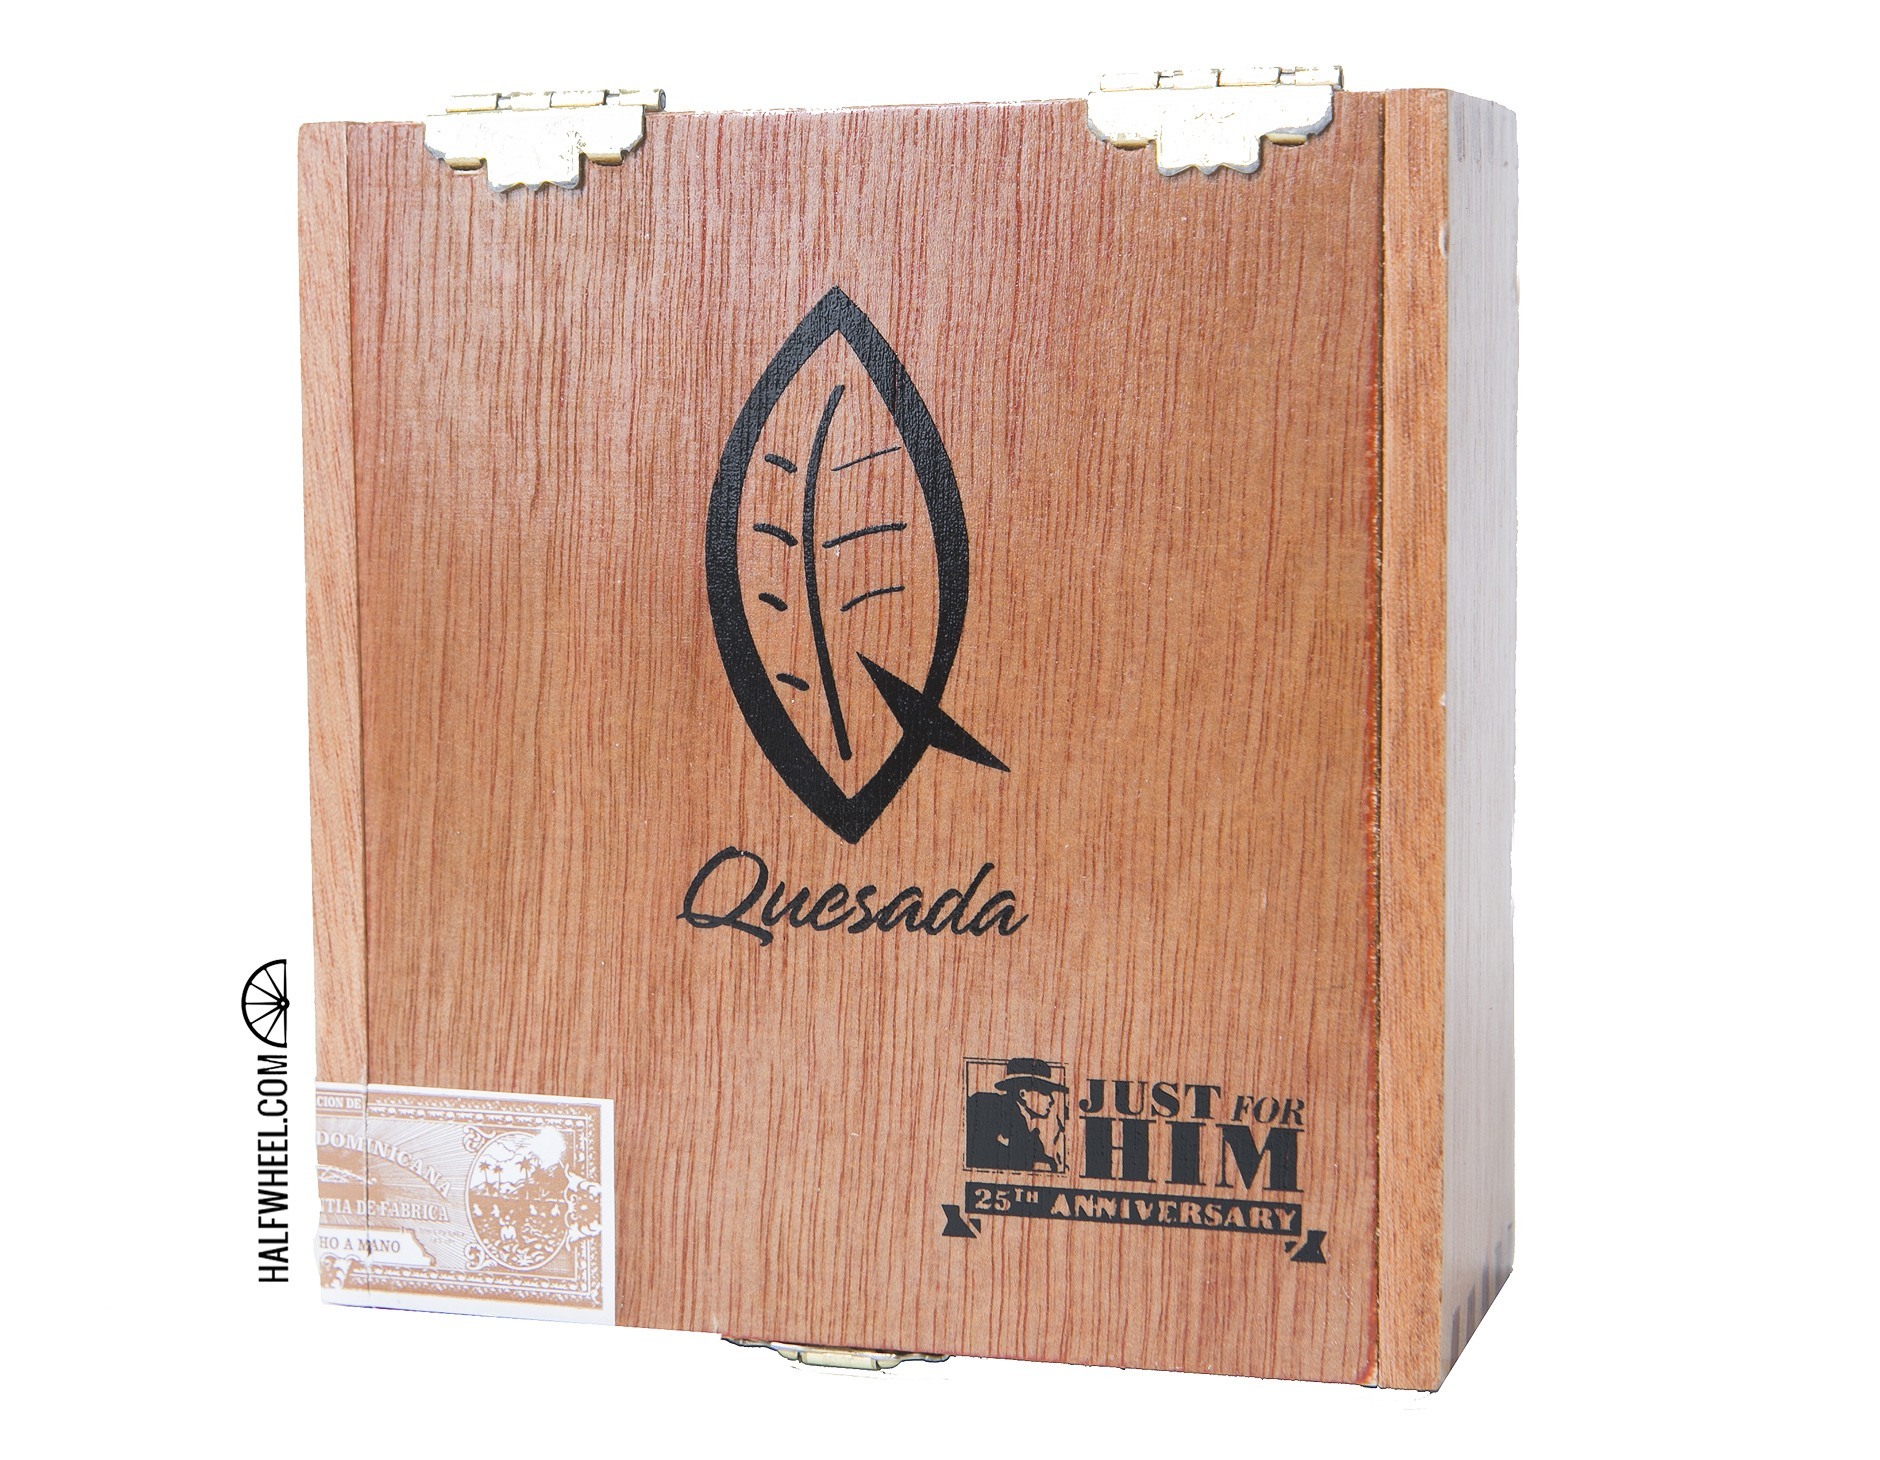 Quesada Espana JFH 25th Anniversary Box